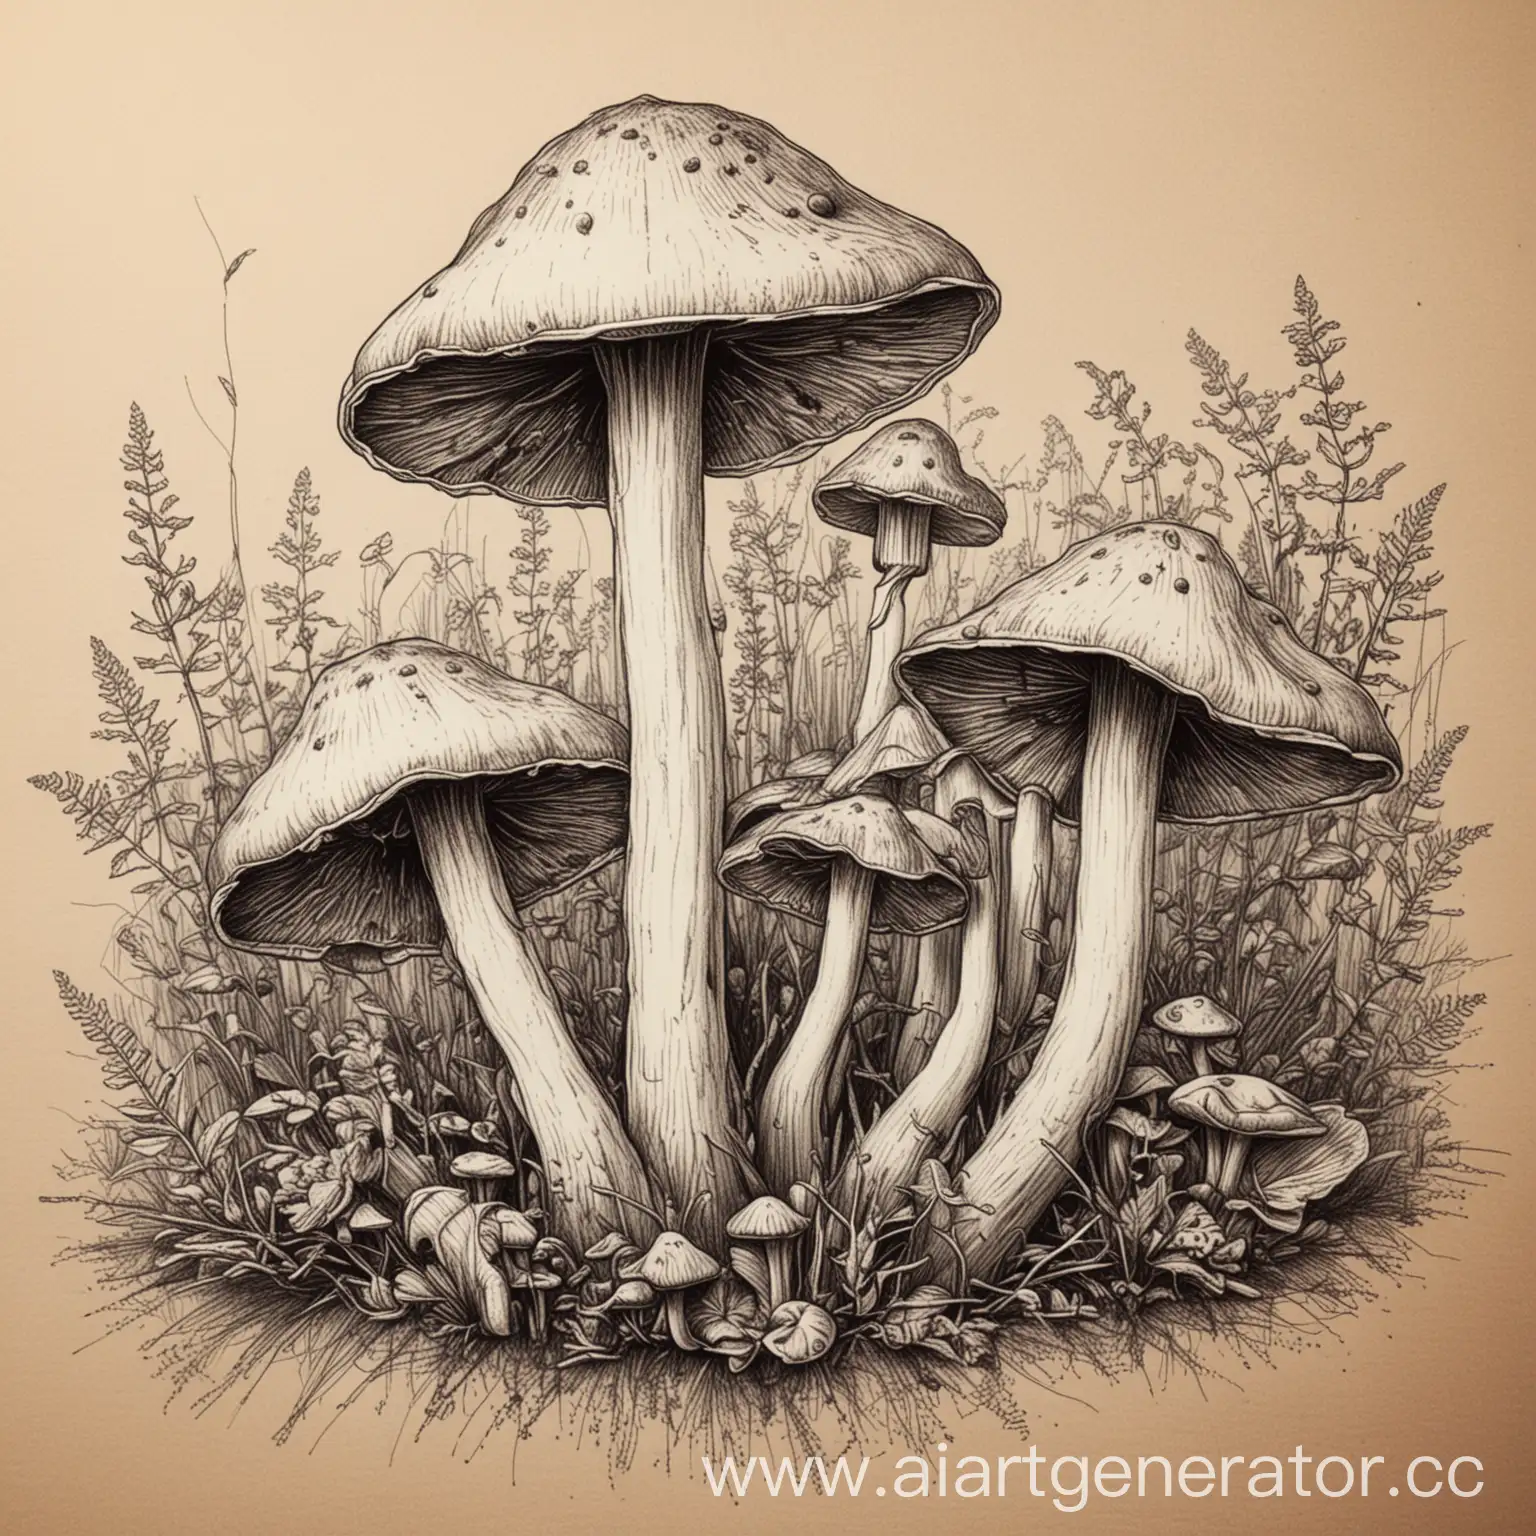 psilocybin mushrooms, sketch drawing

